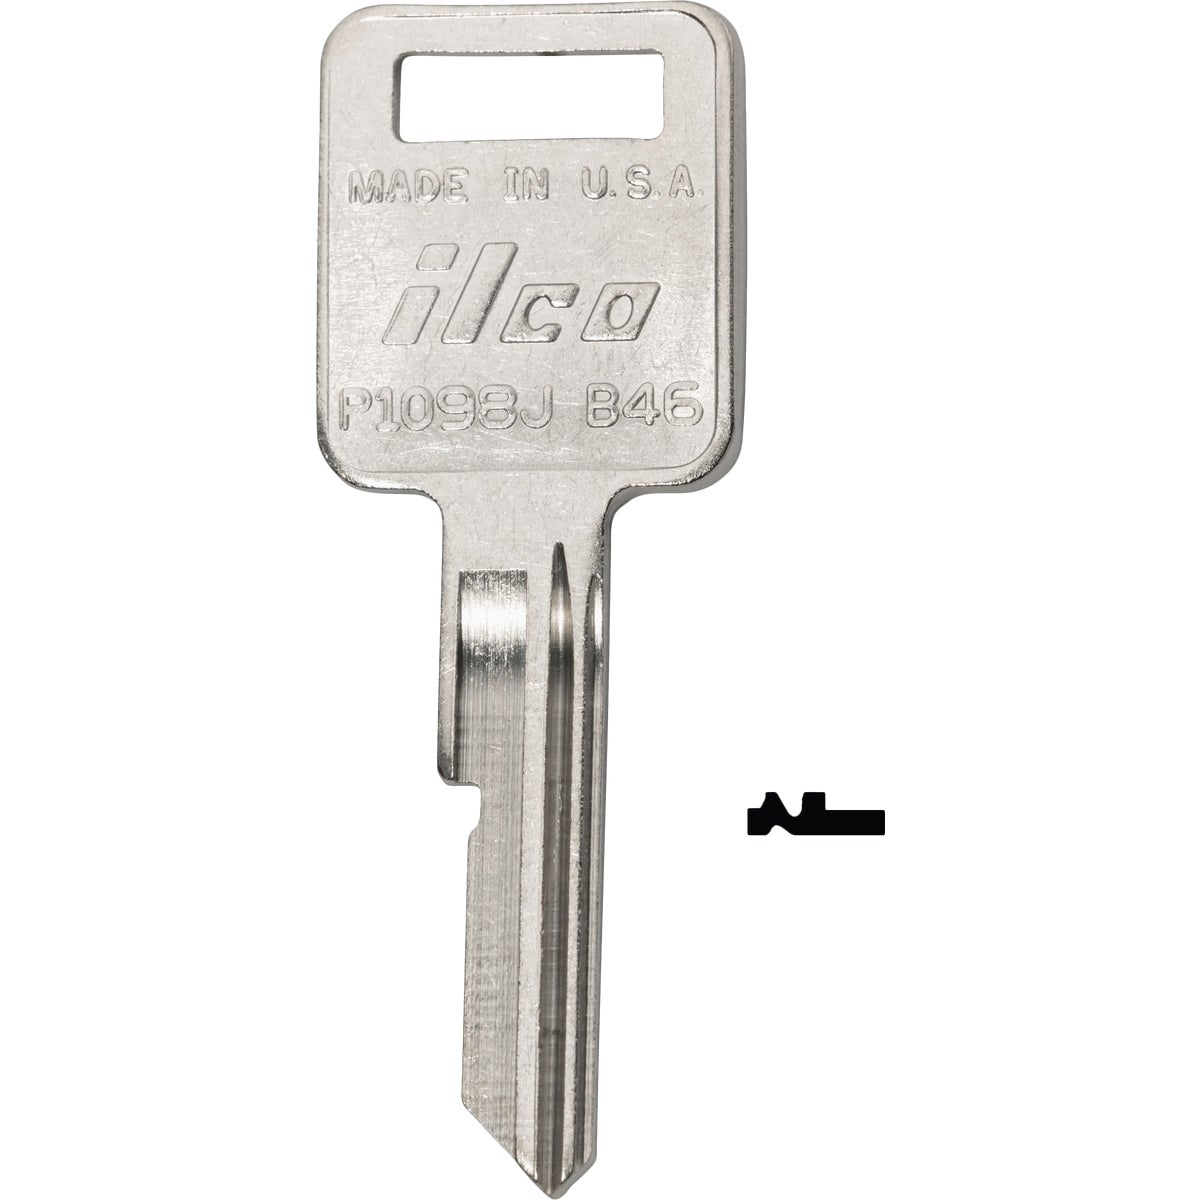 ILCO AMC Nickel Plated Automotive Key B46 / P1098J (10-Pack)